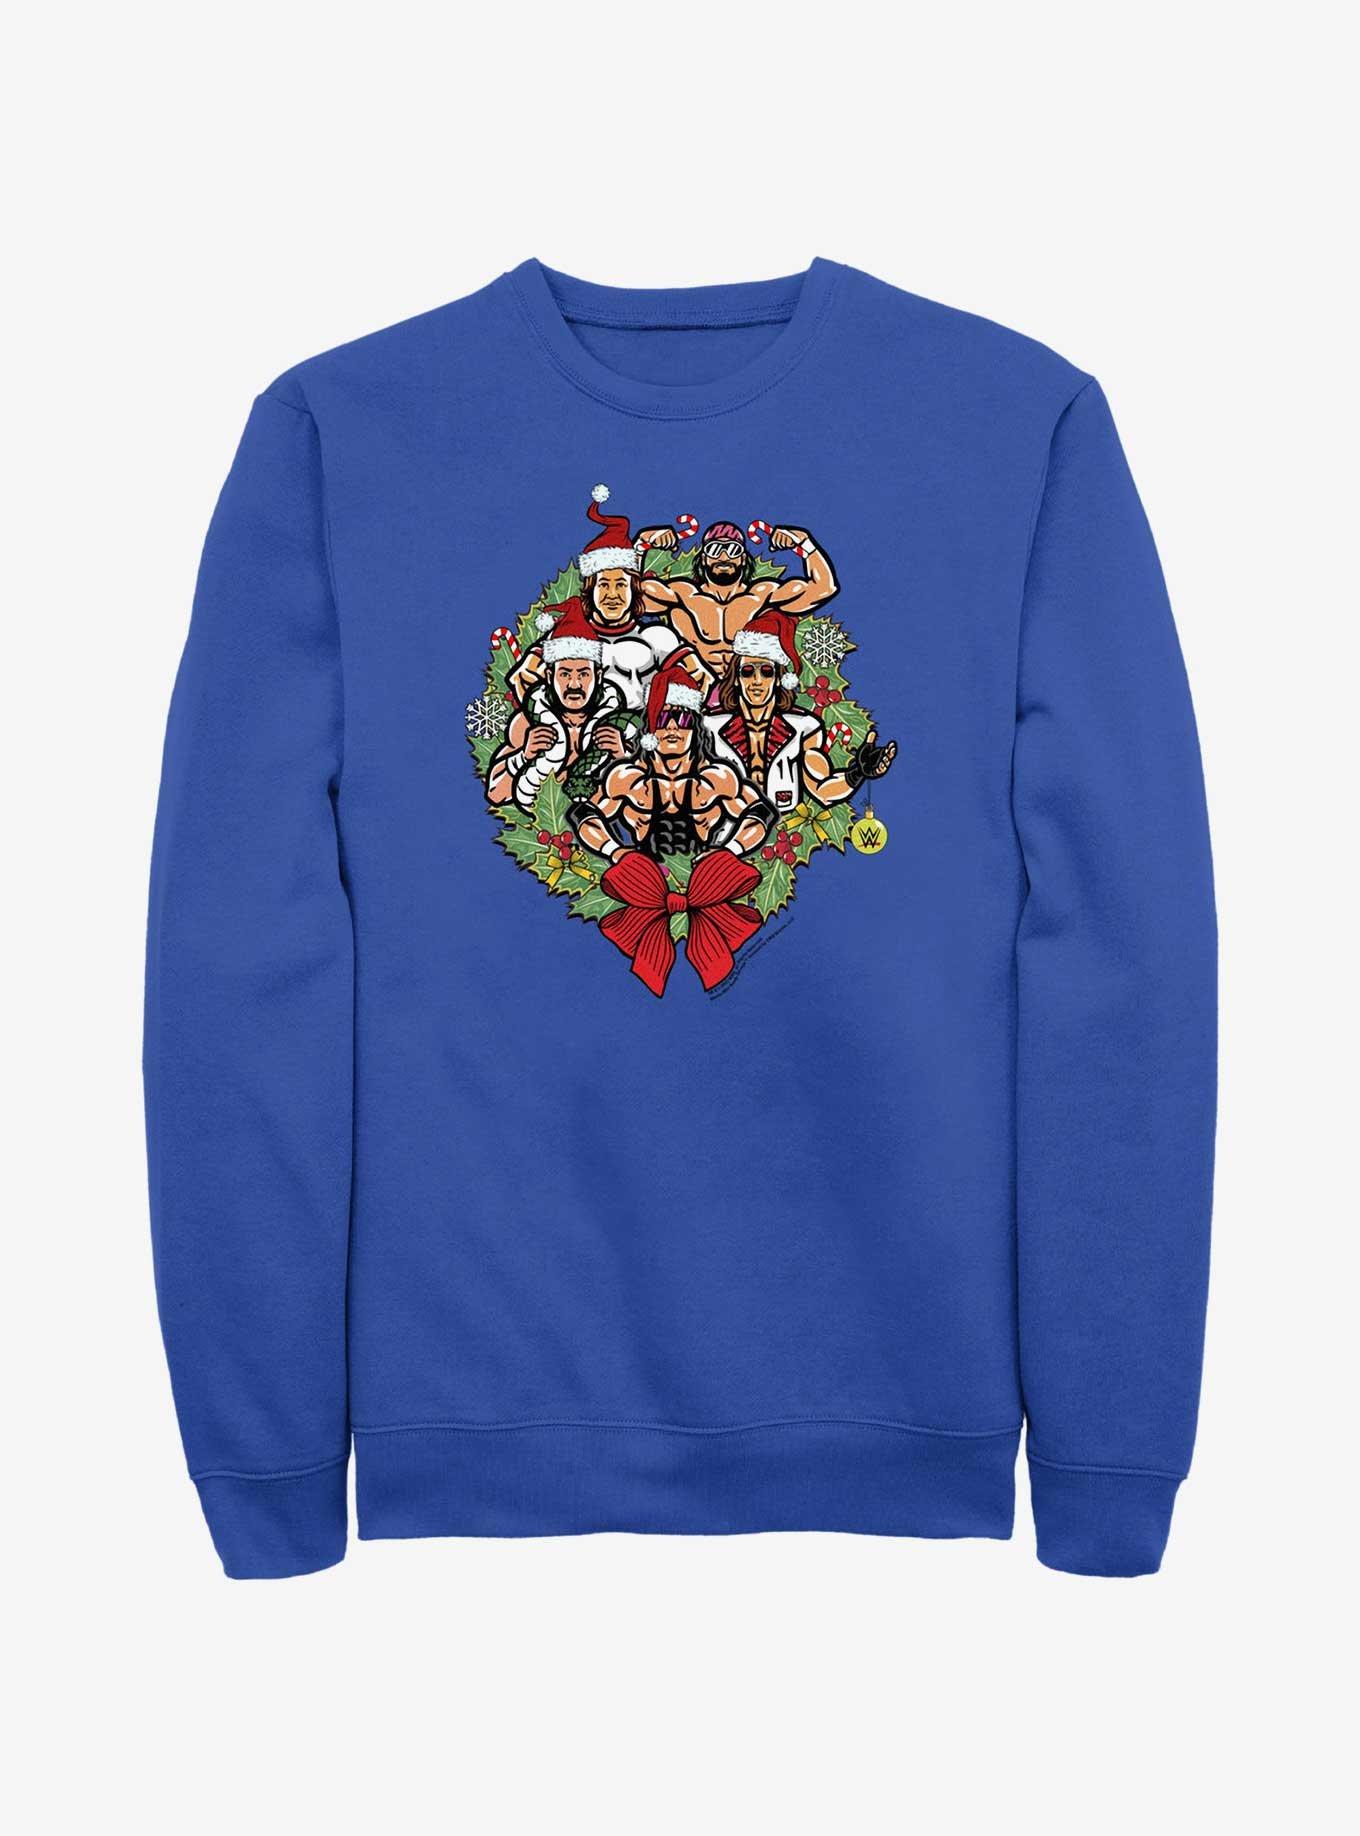 WWE Holiday Legends Wreath Sweatshirt, ROYAL, hi-res